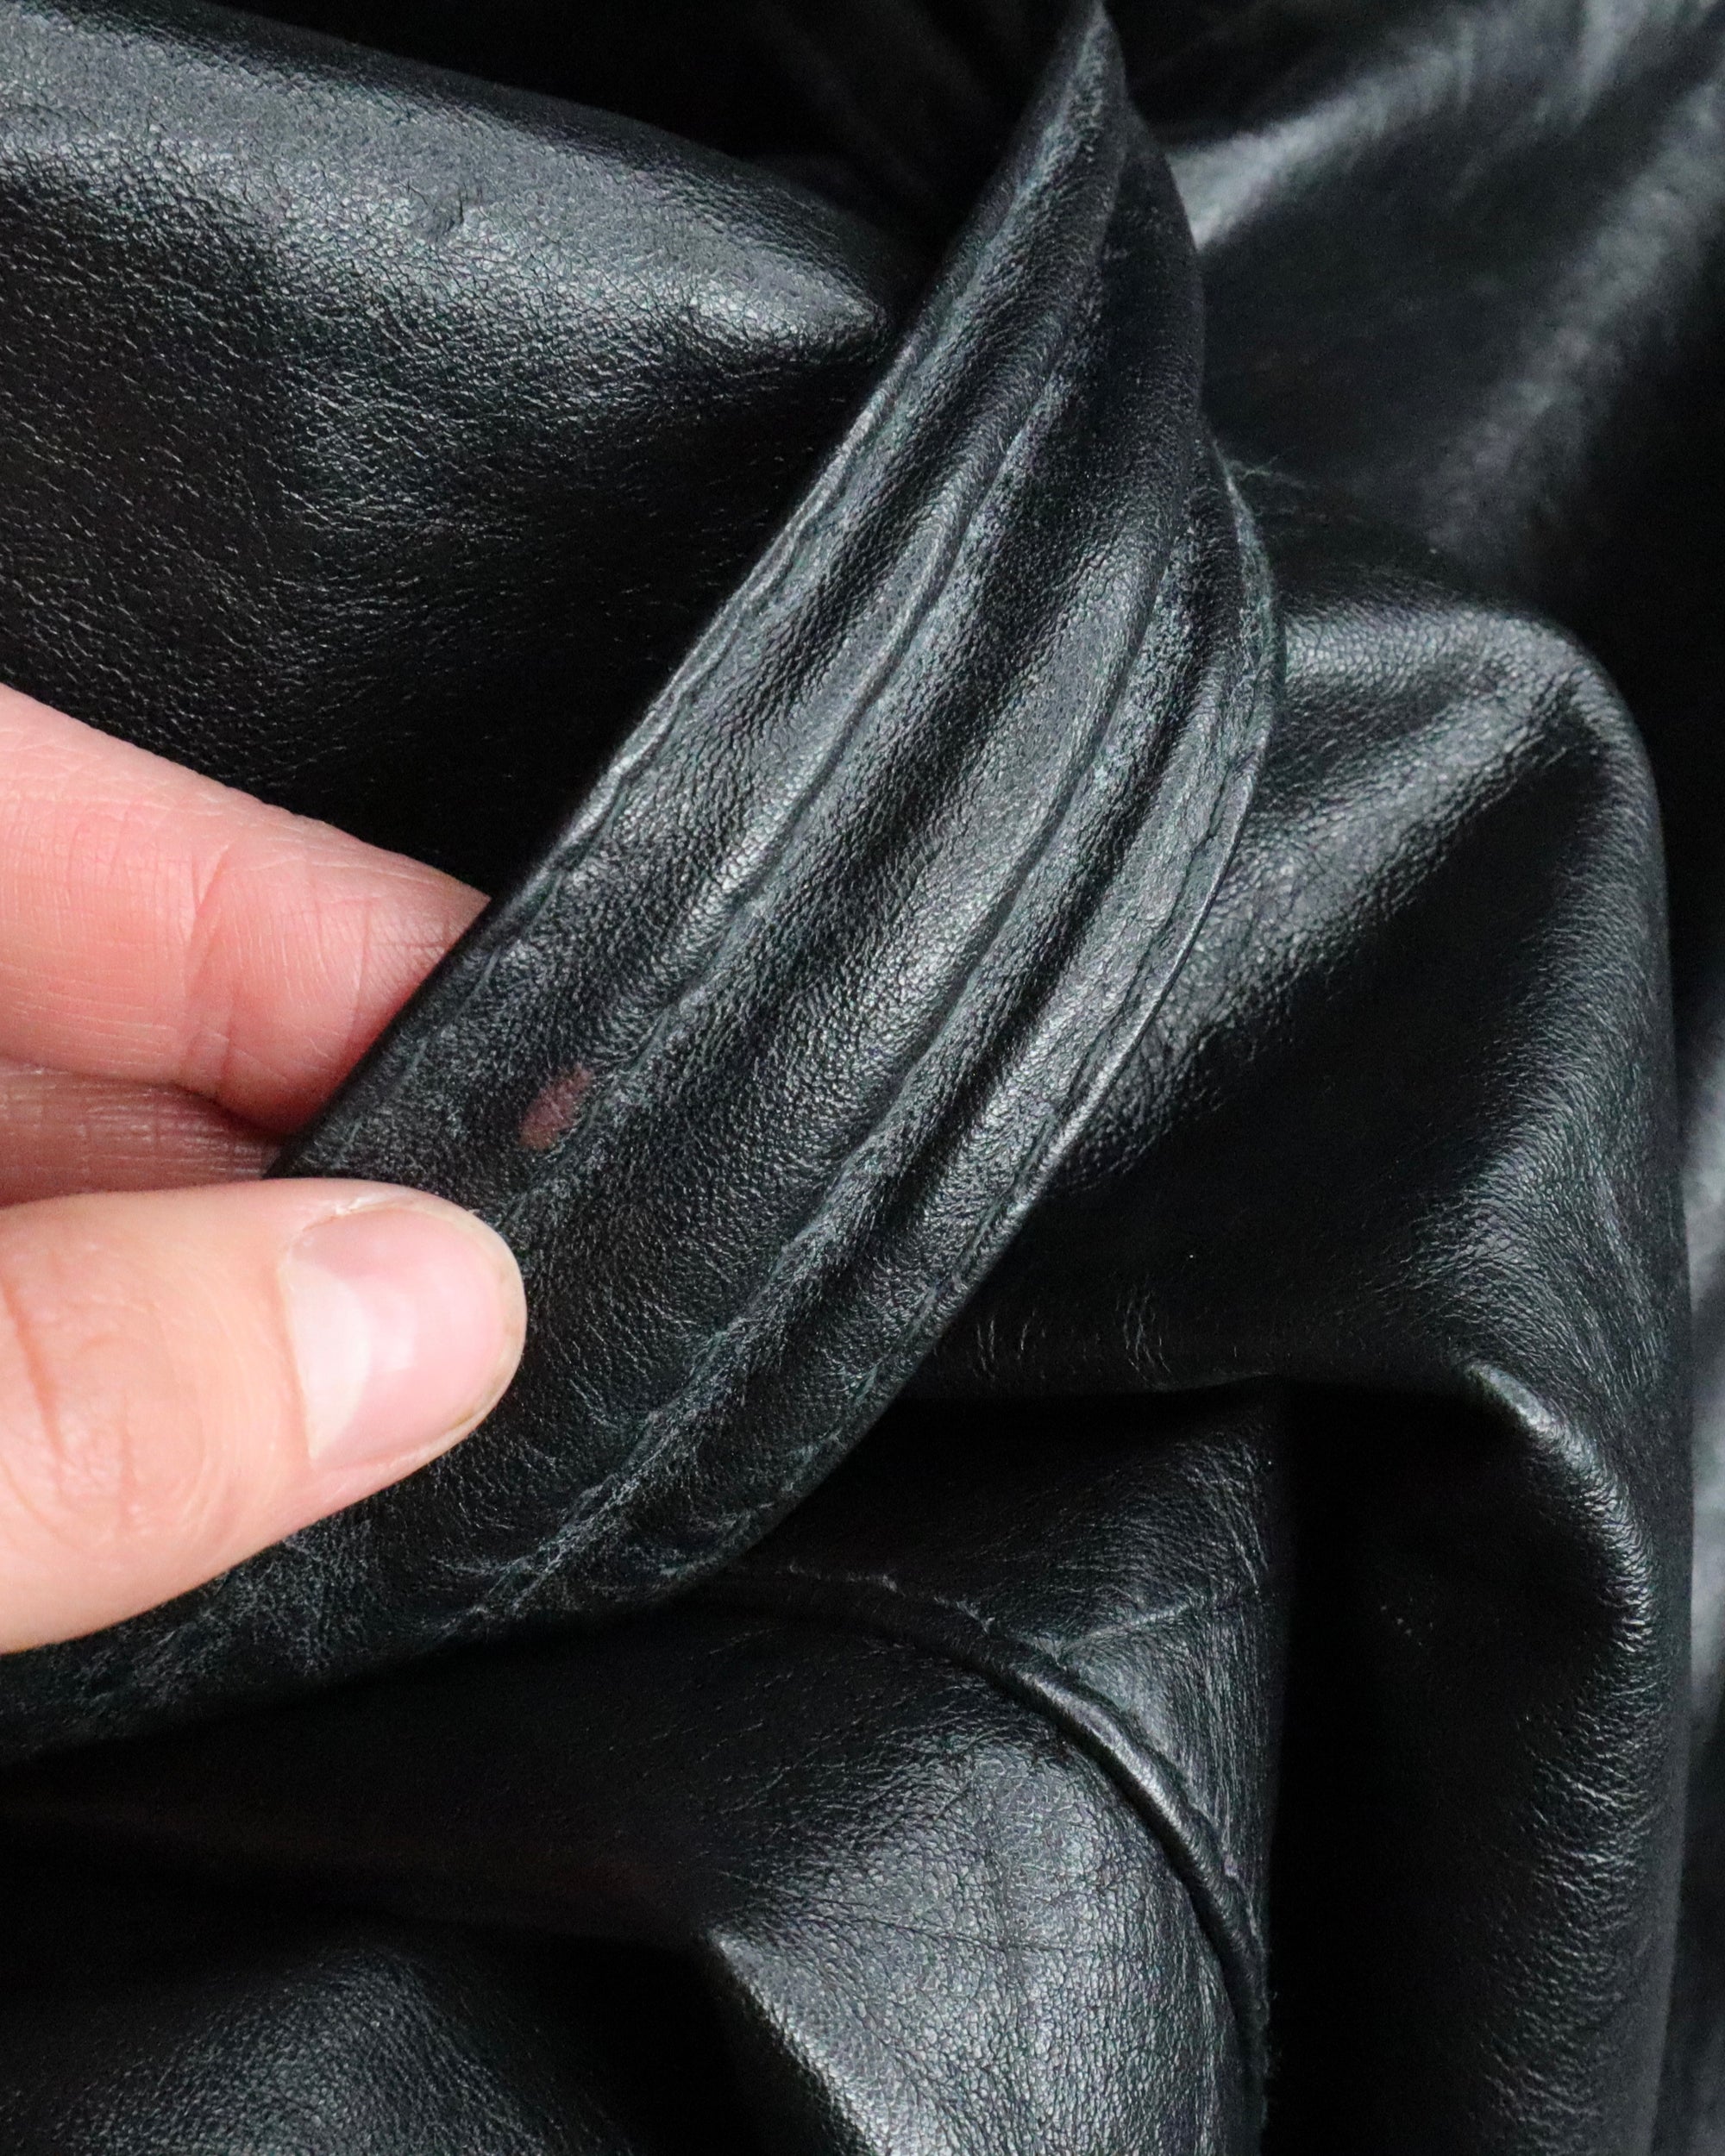 Long Black Leather Jacket (S-M) 